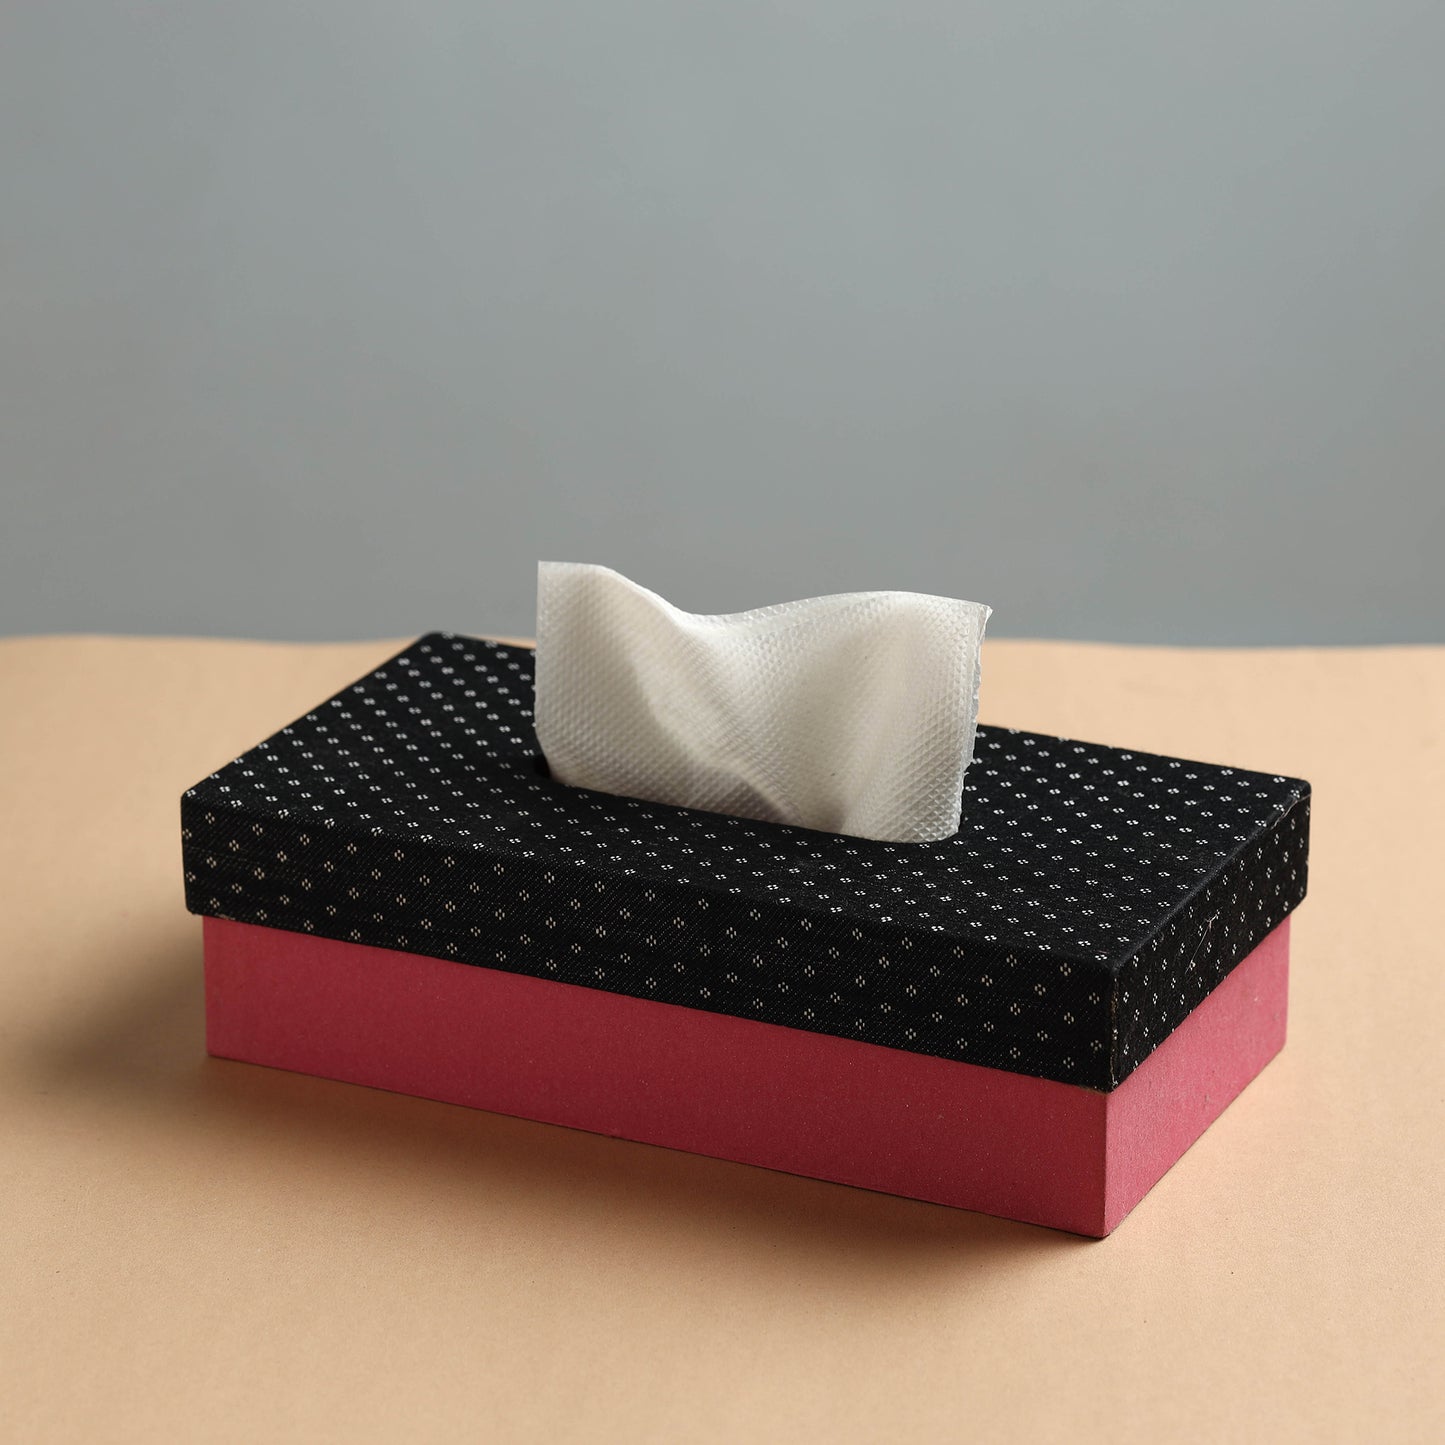 Fabric Tissue Box
